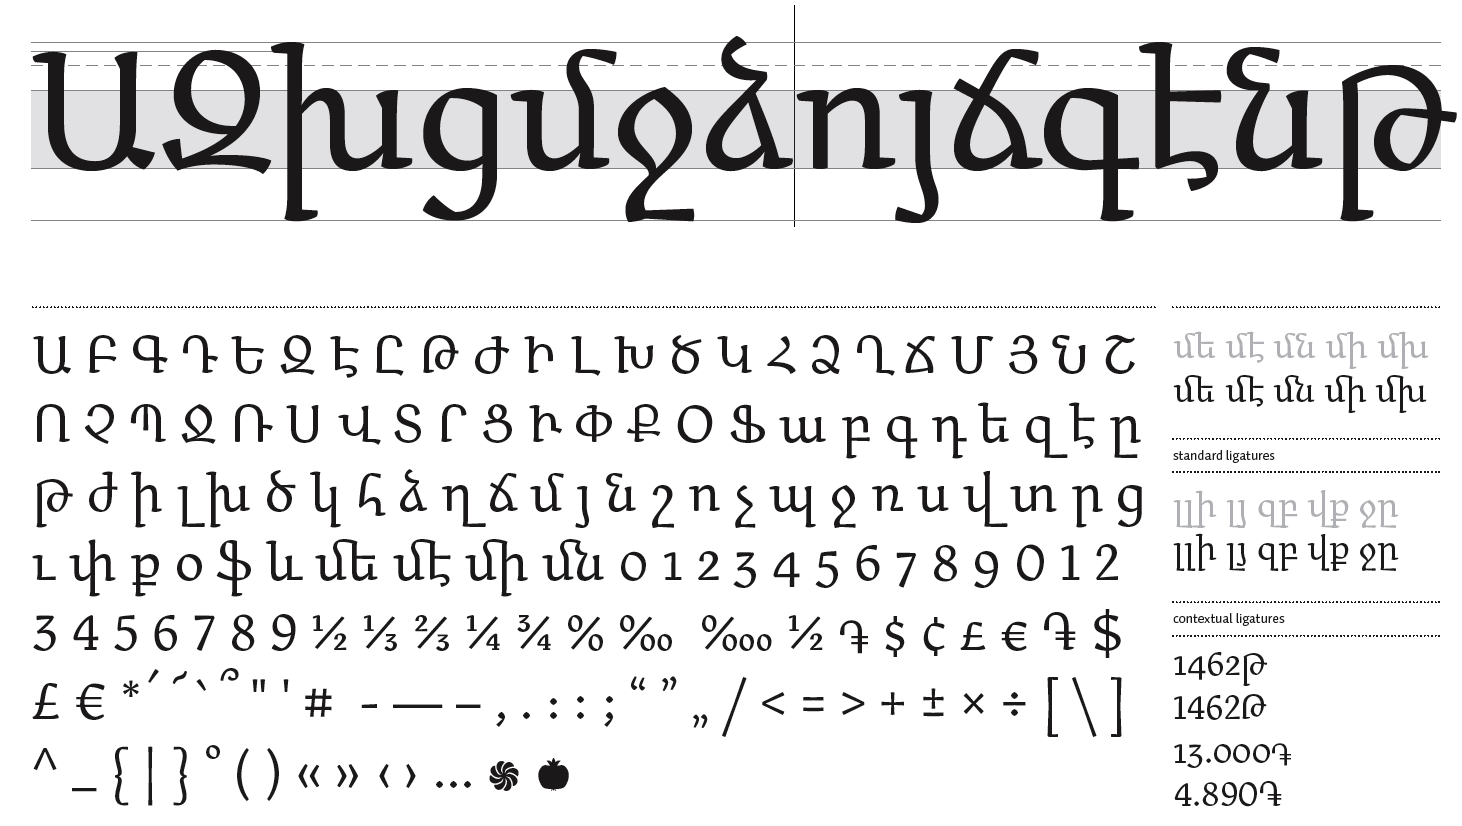 armenian script font commercial